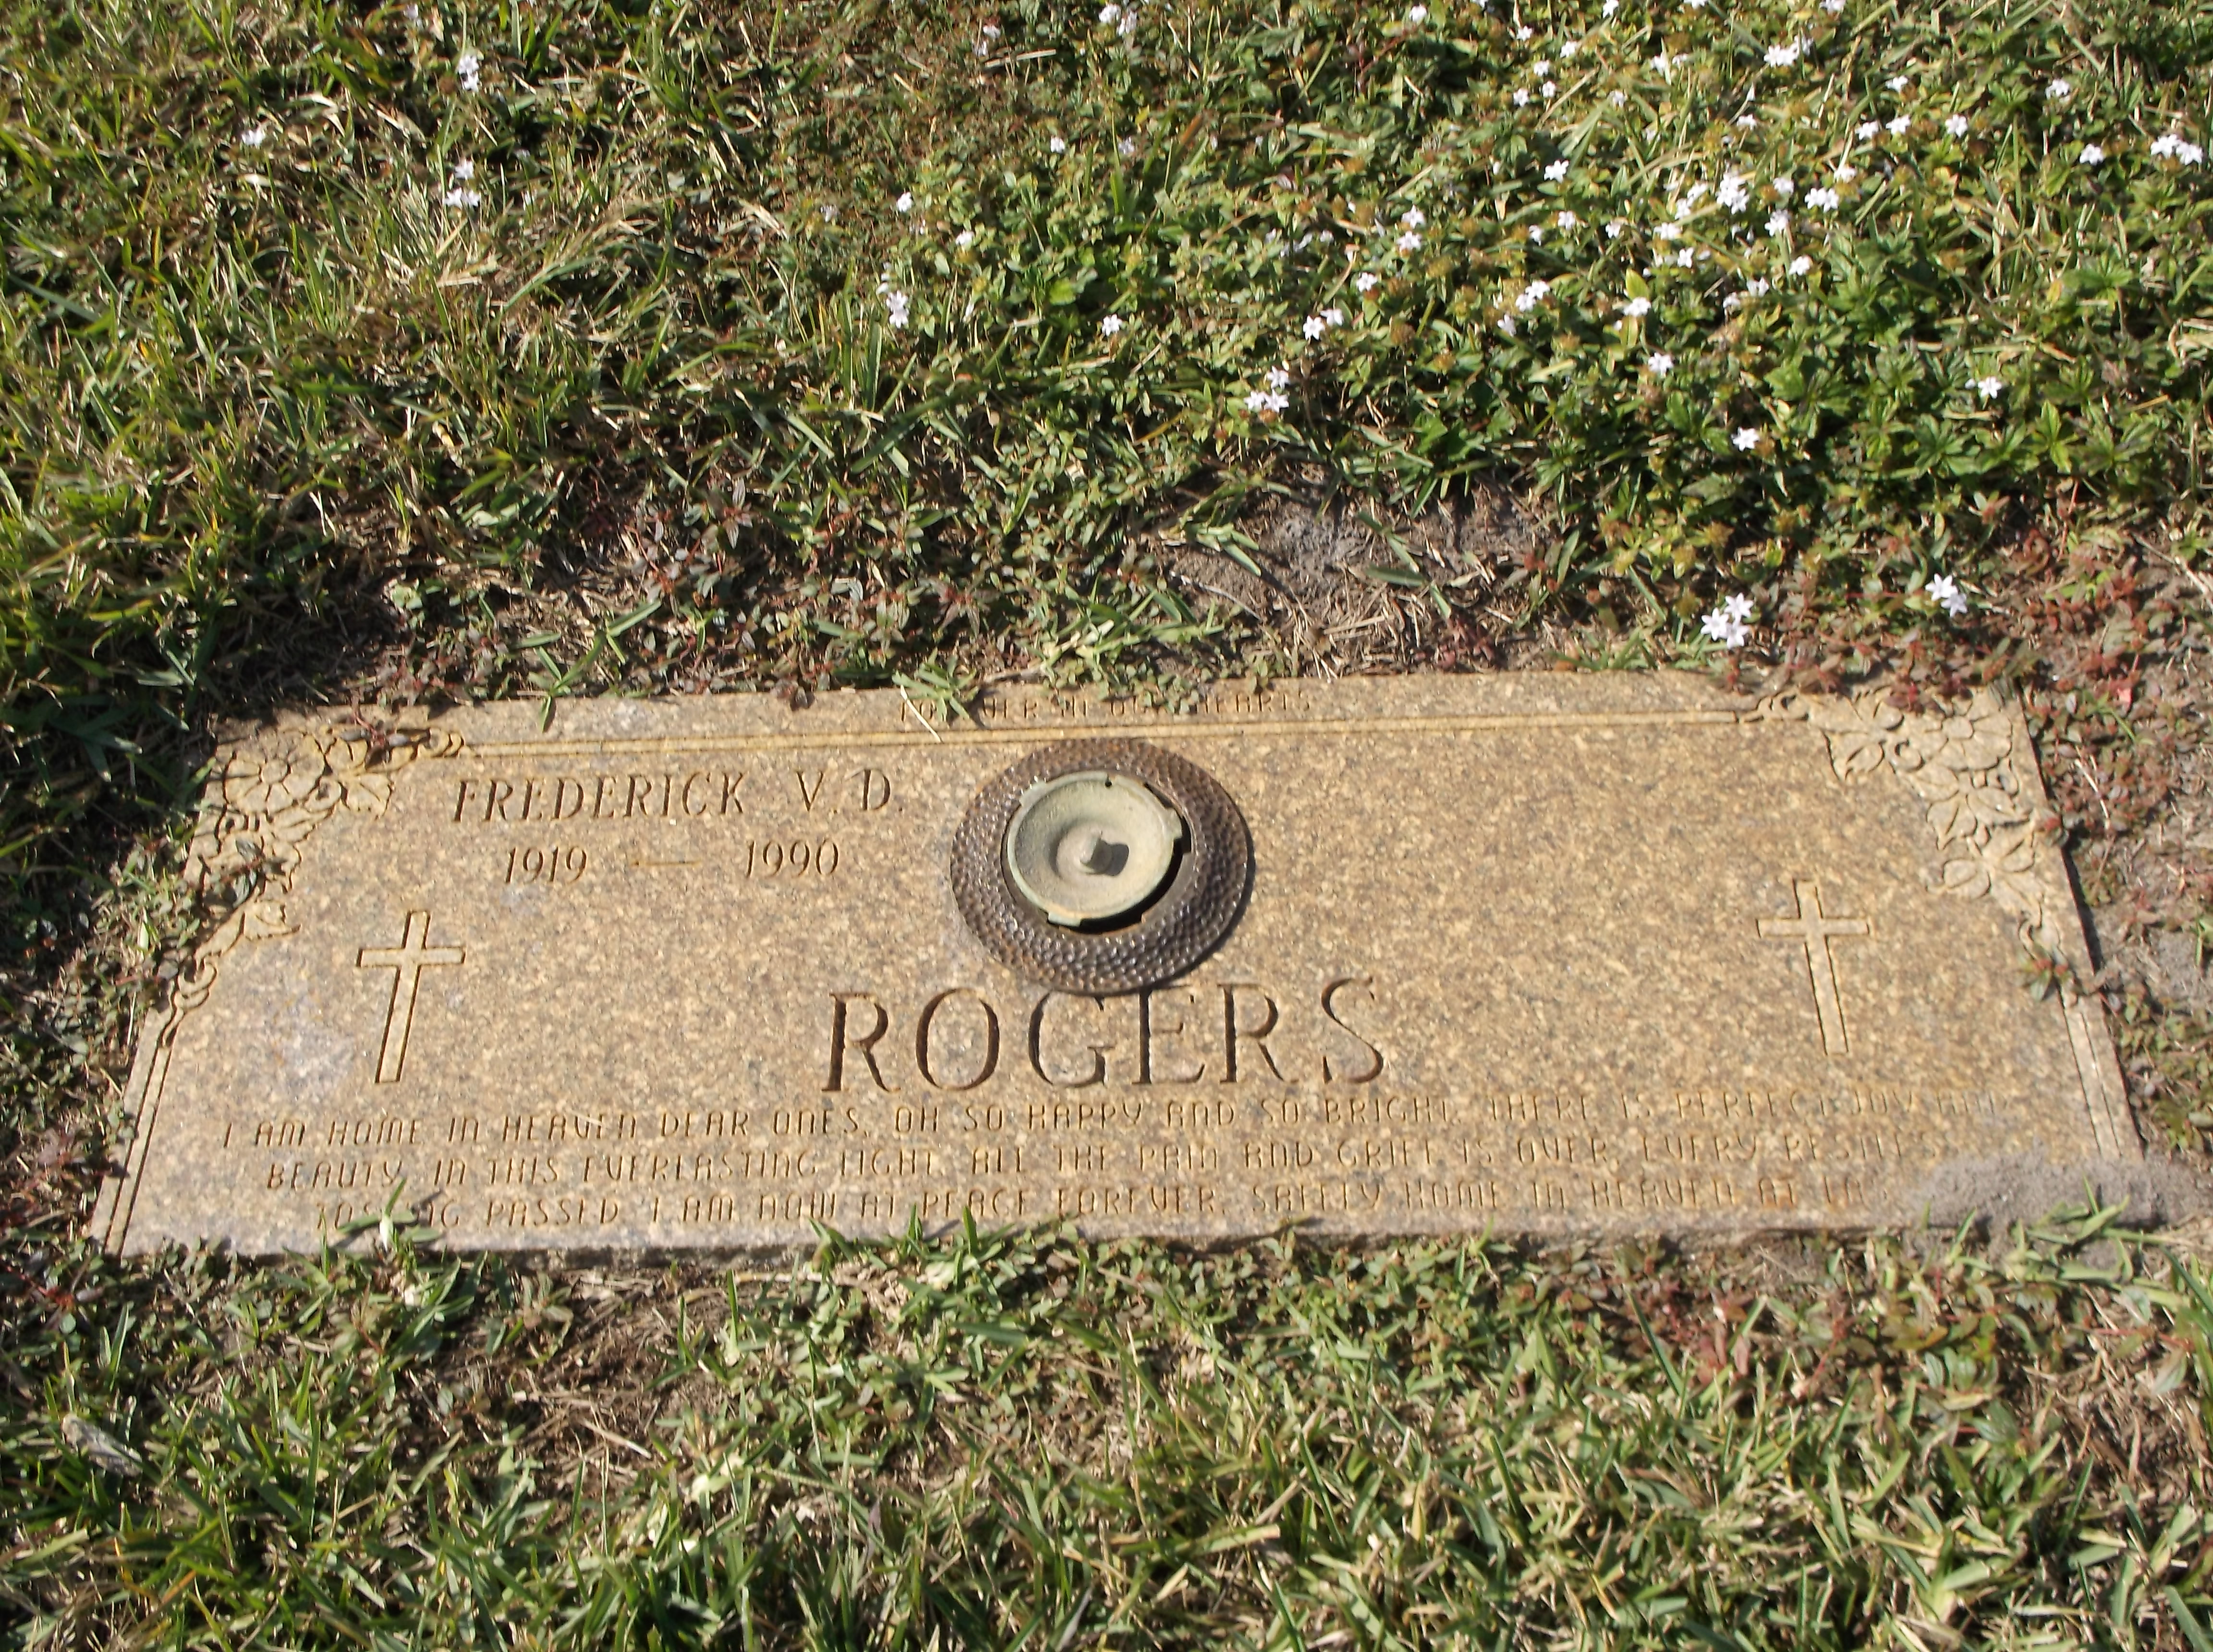 Frederick V D Rogers